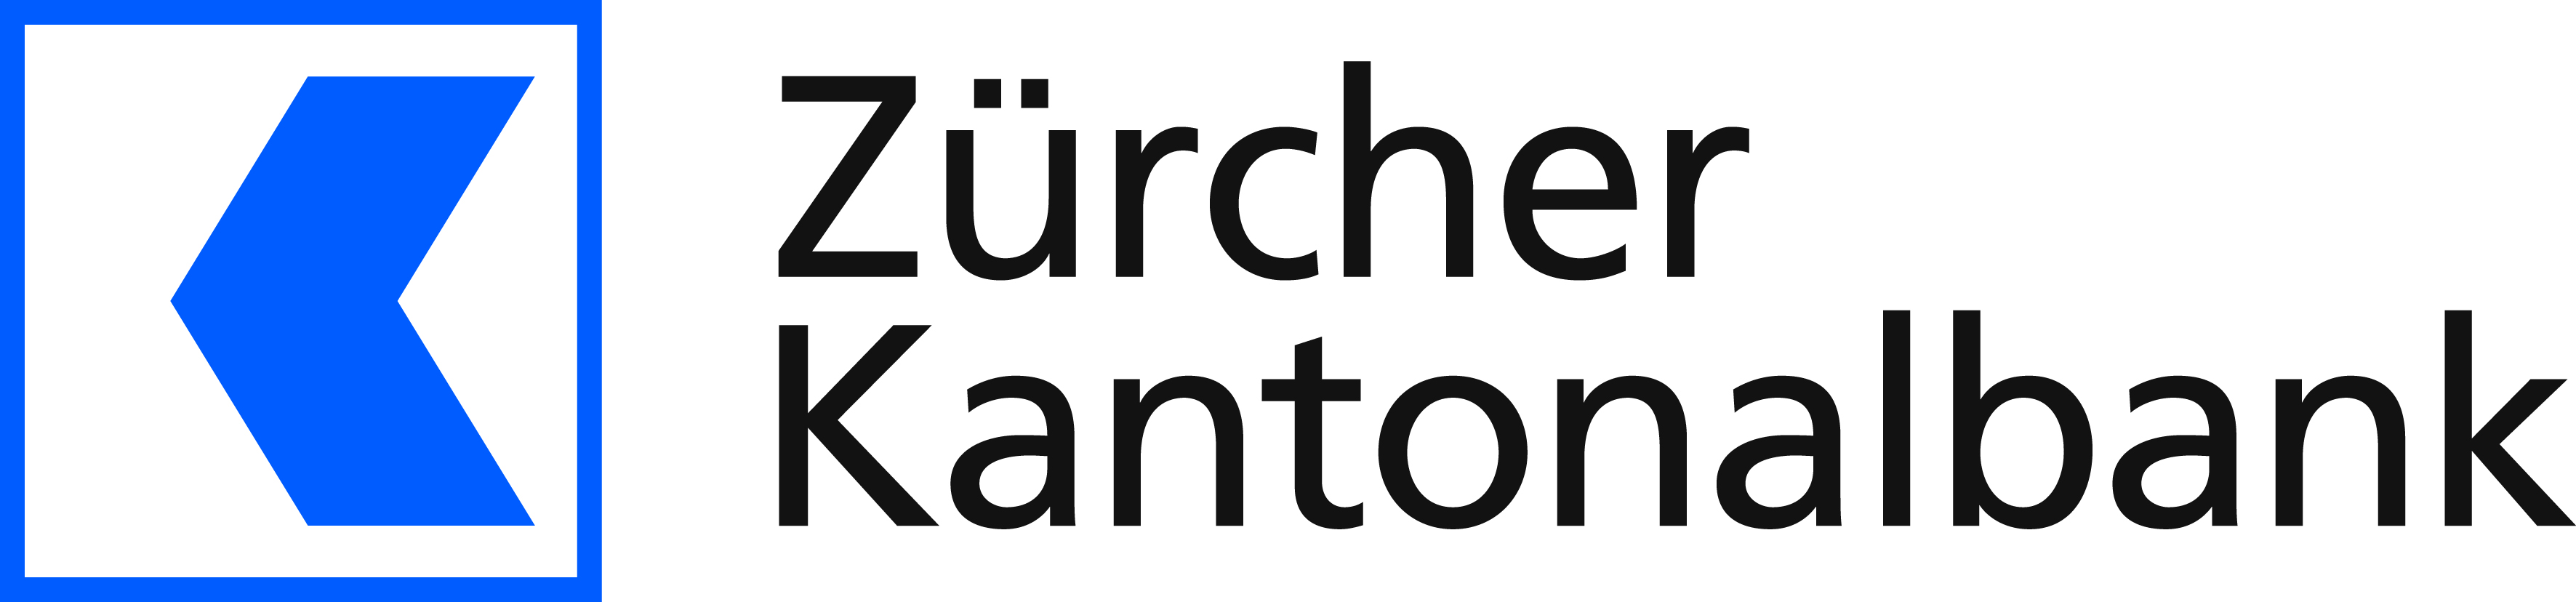 Zurcher Kantonal Bank logo